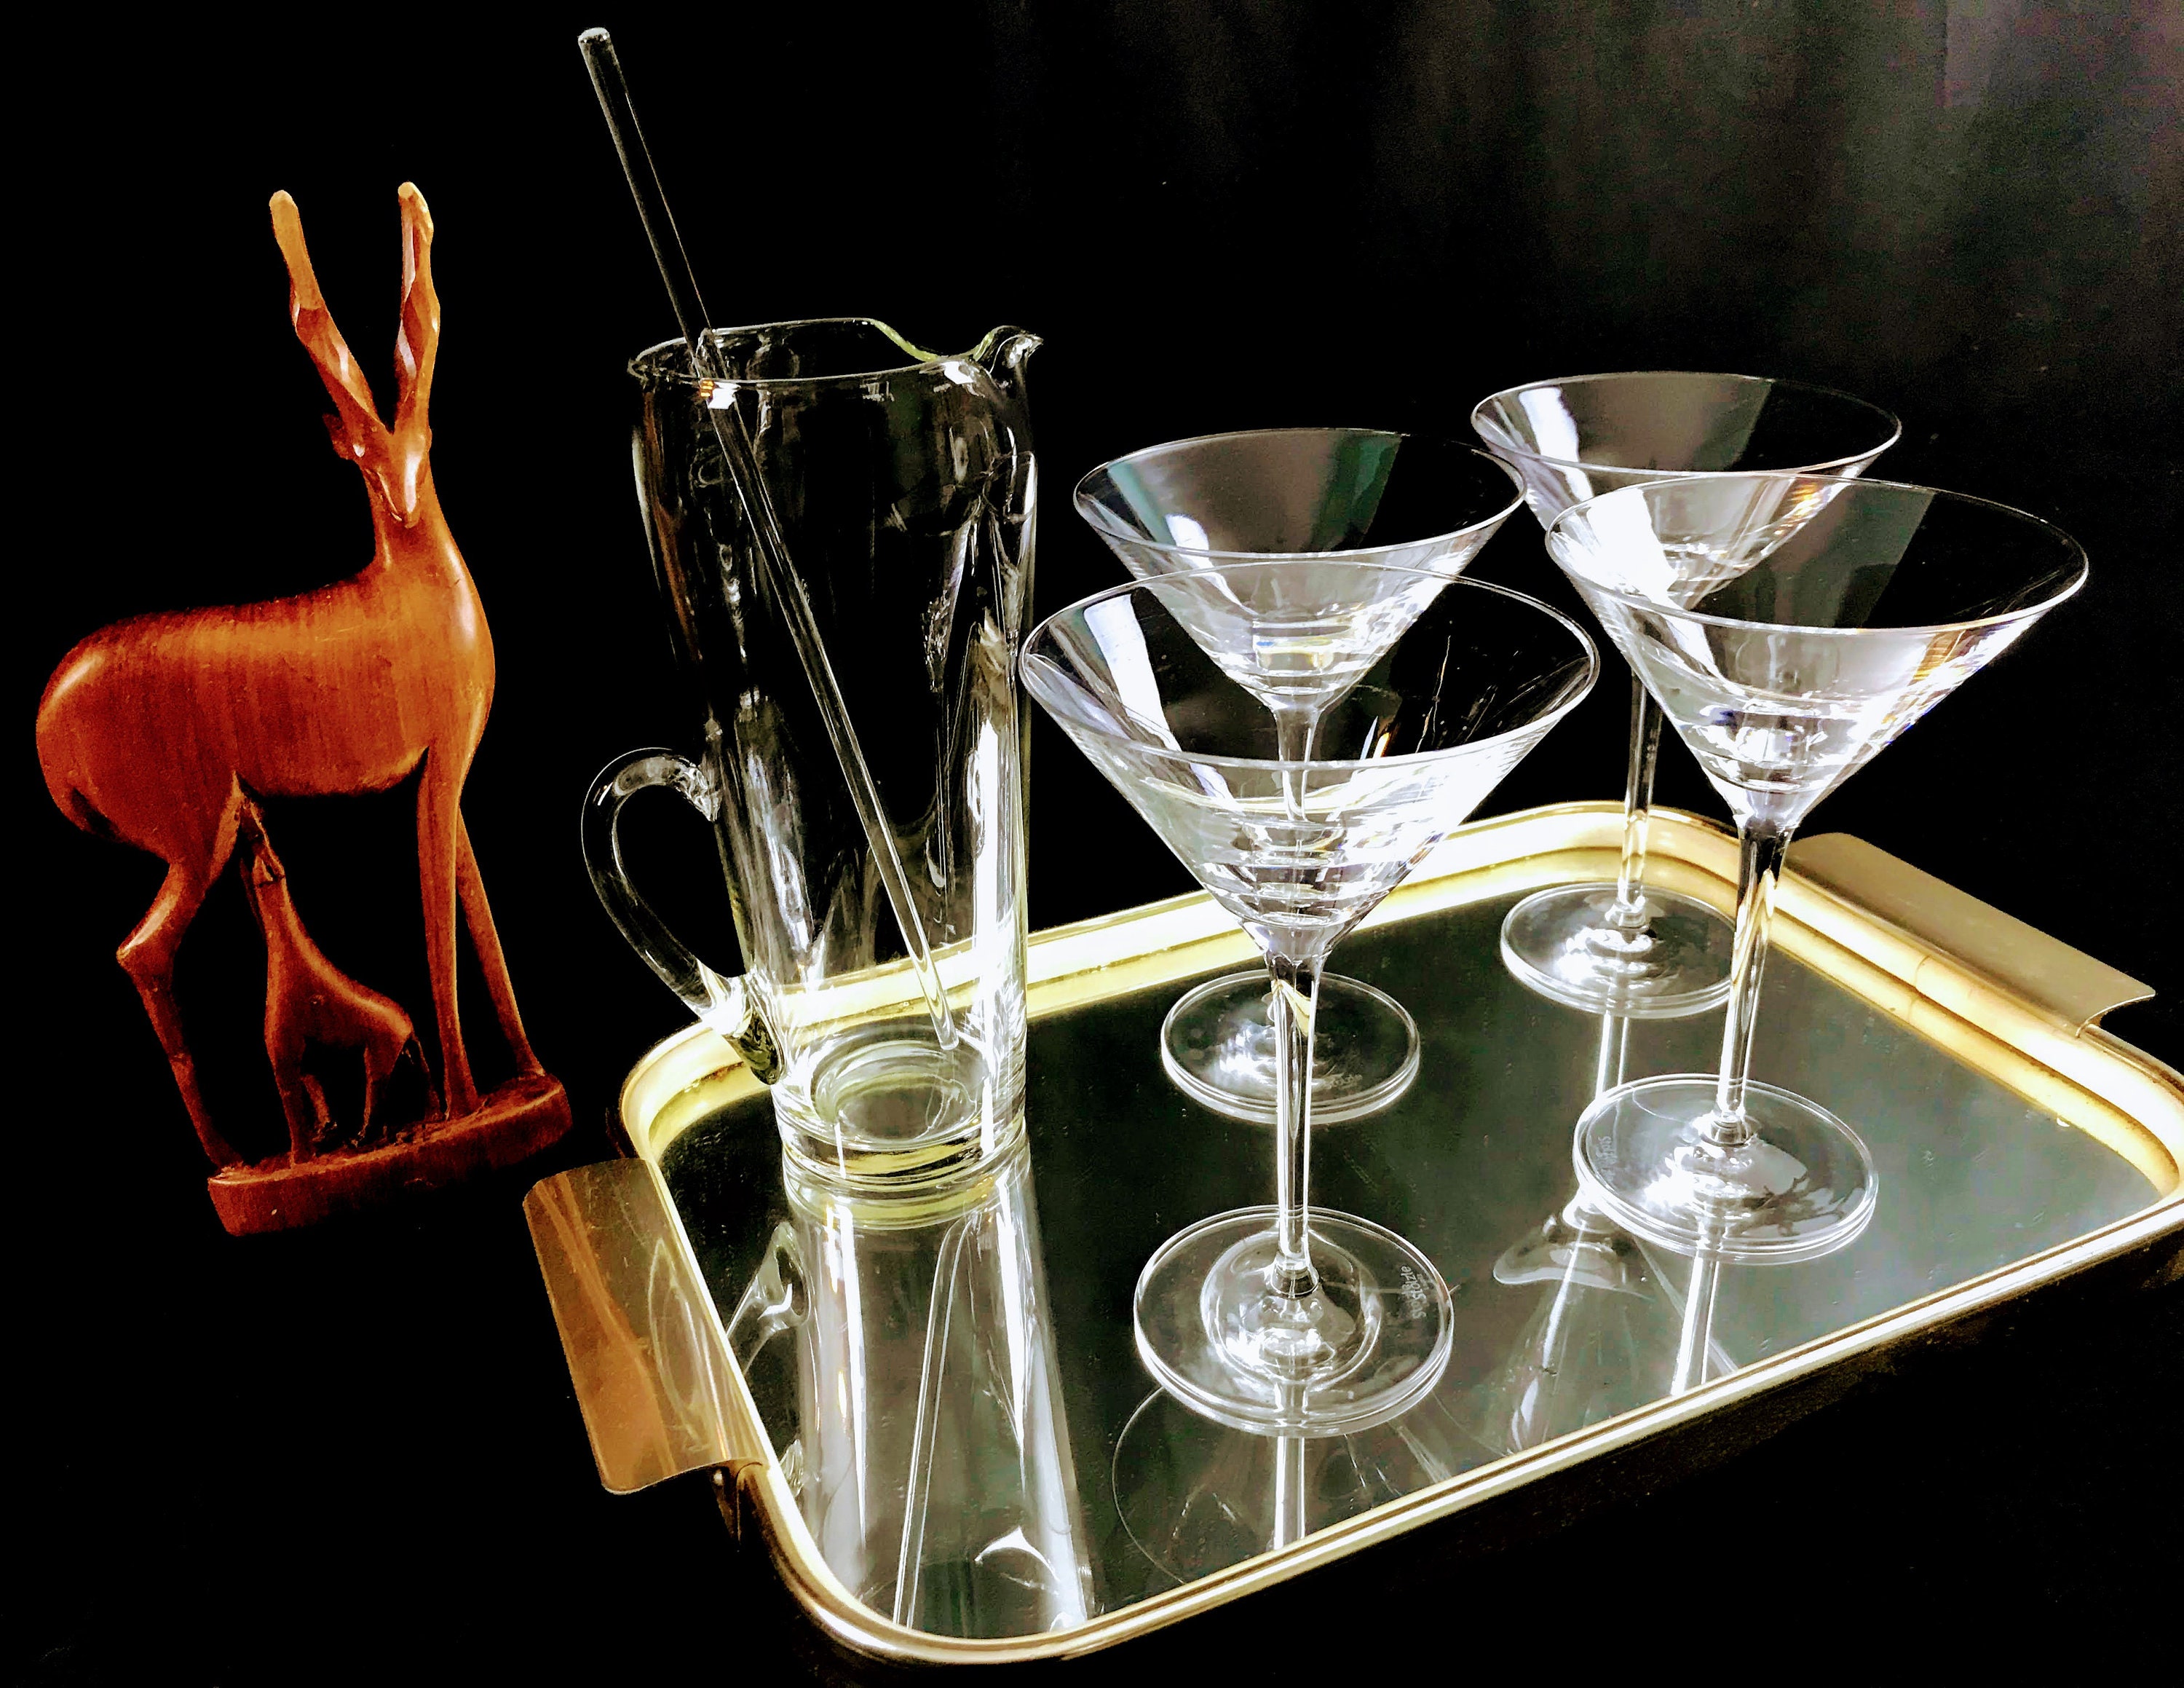 Figural Stag Martini Glasses - Set of 2